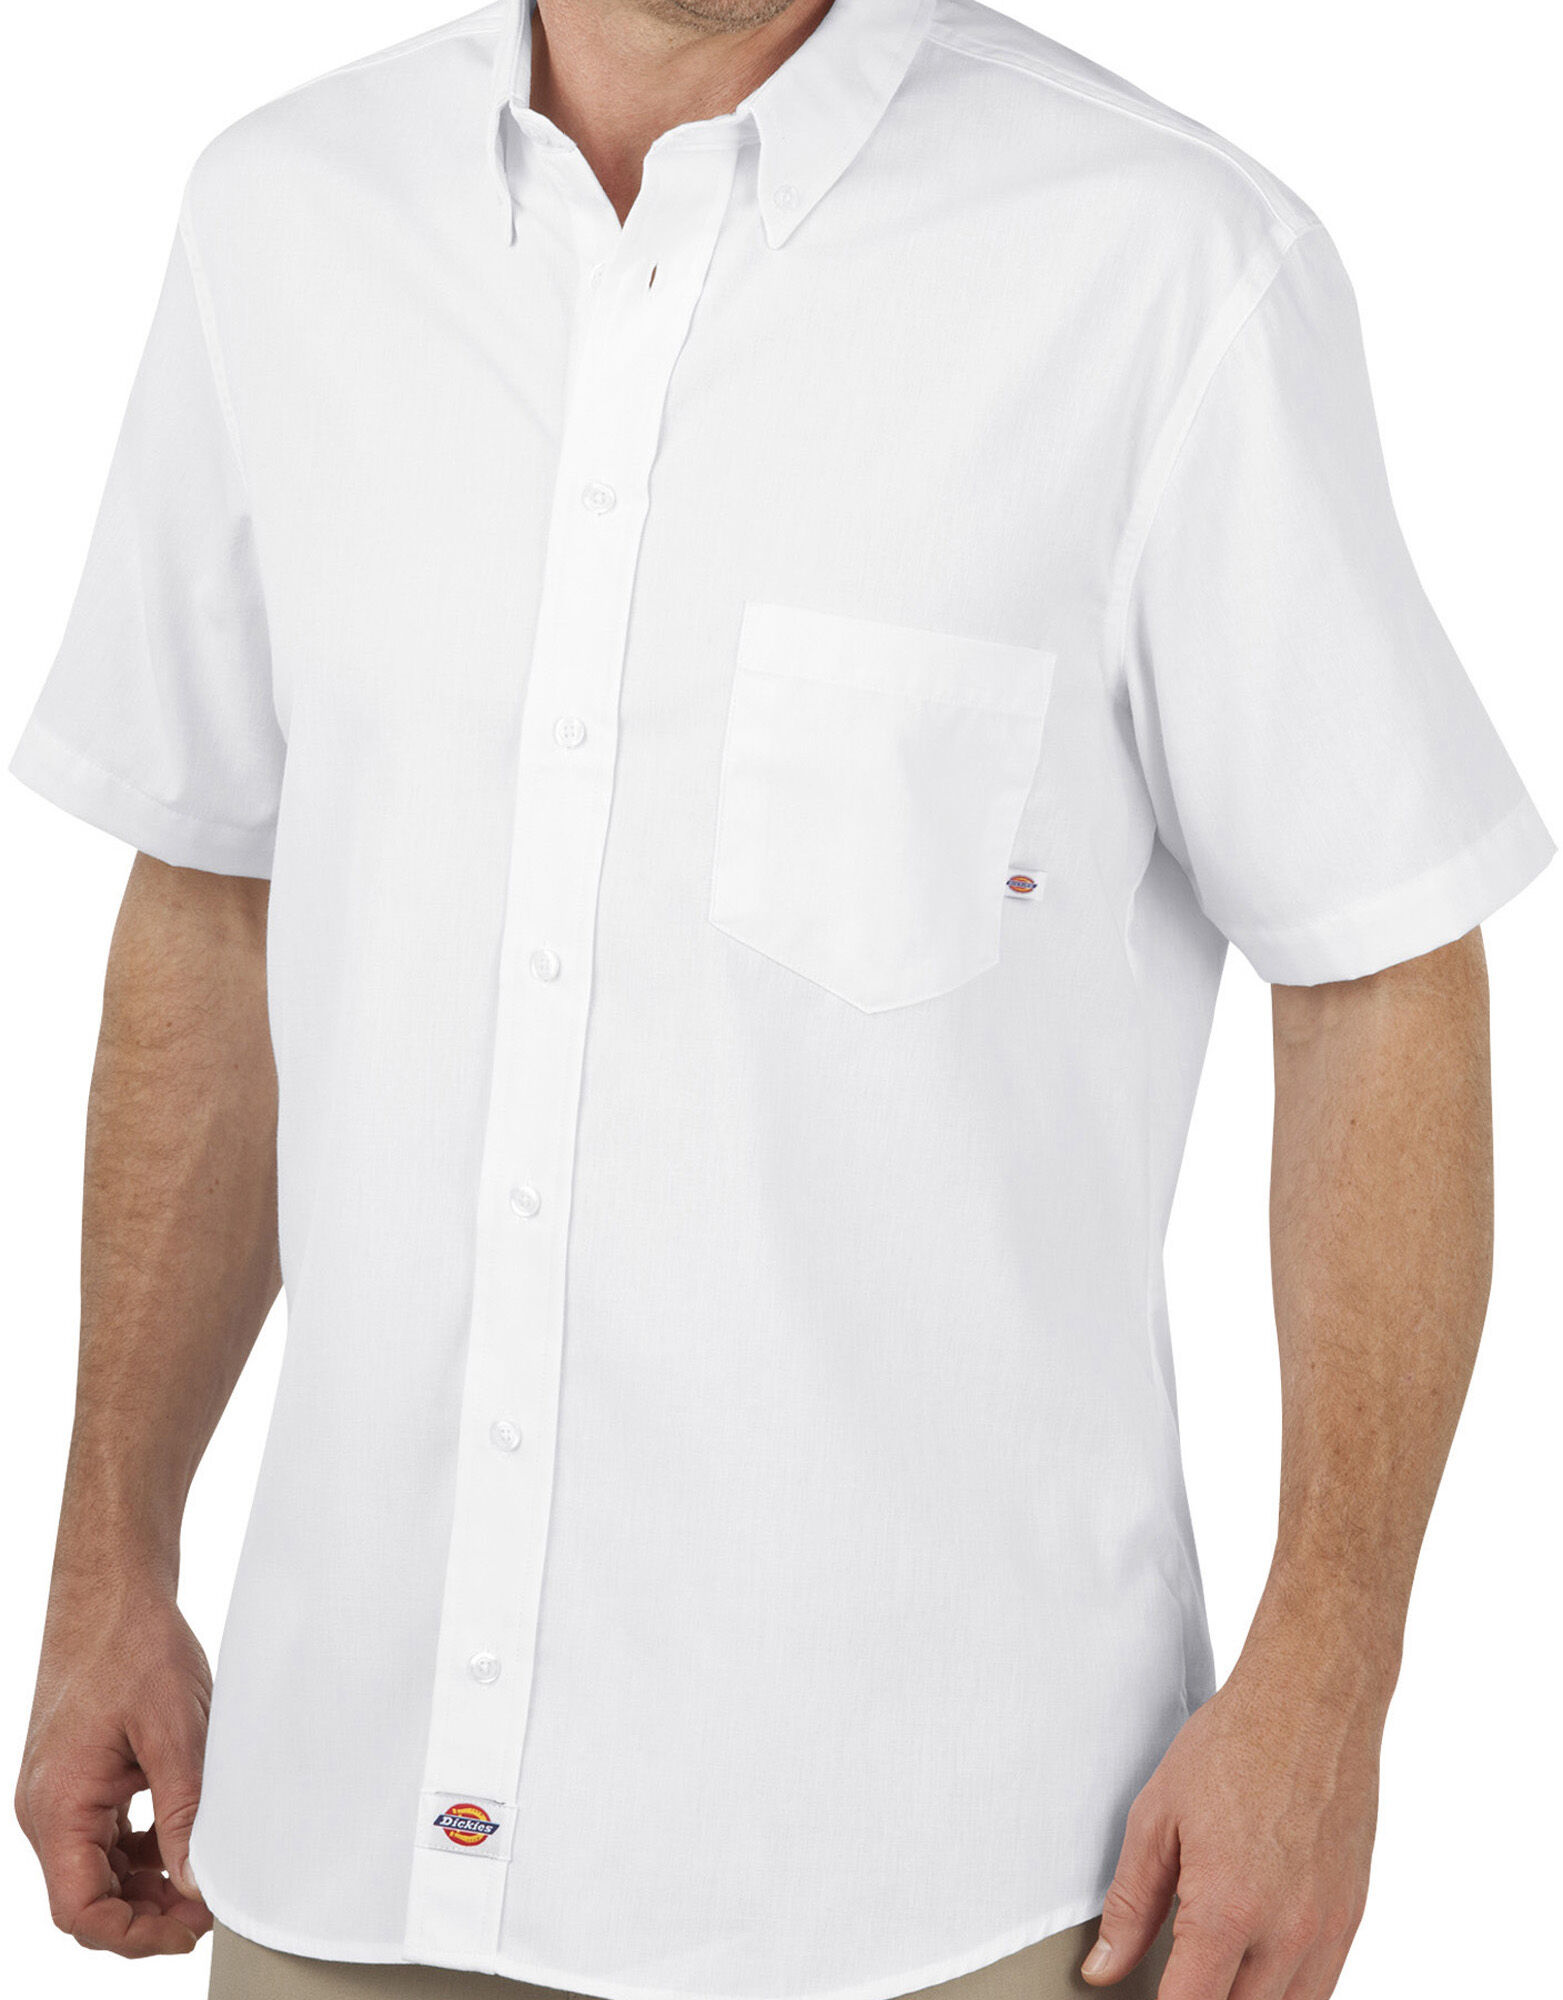 Lookatool T Shirt Top Blouse Men Casual Slim Letter Printed Short Sleeve